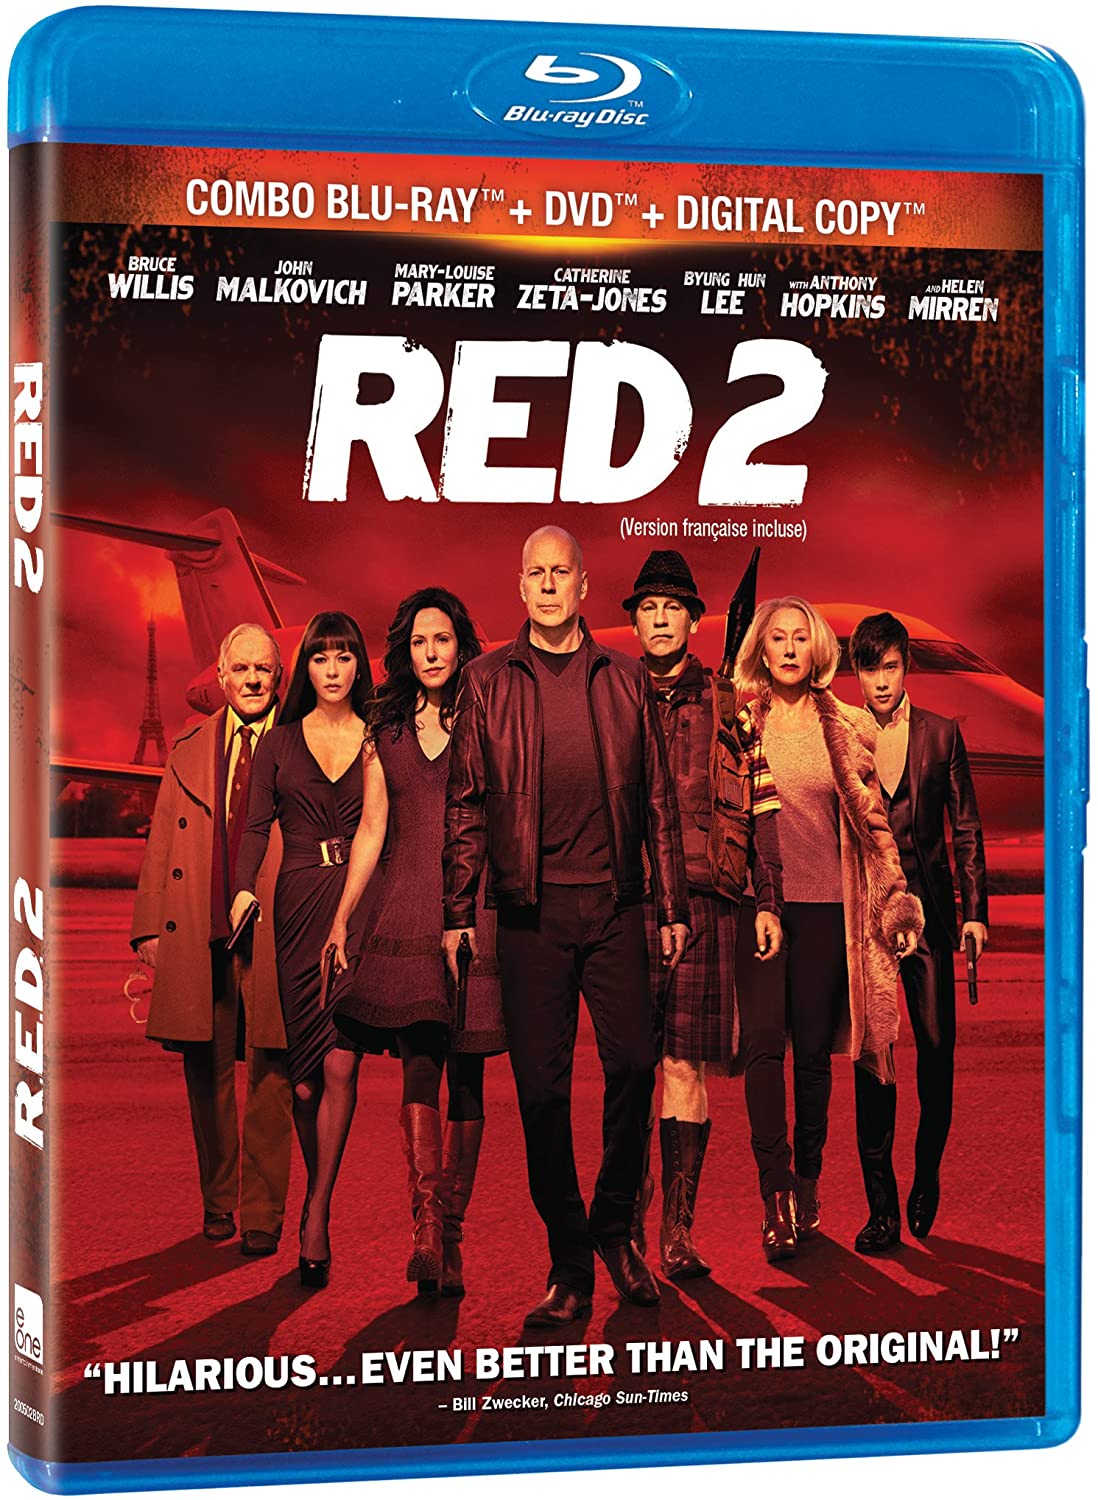 Red 2 [Blu-ray + DVD + Digital Copy]